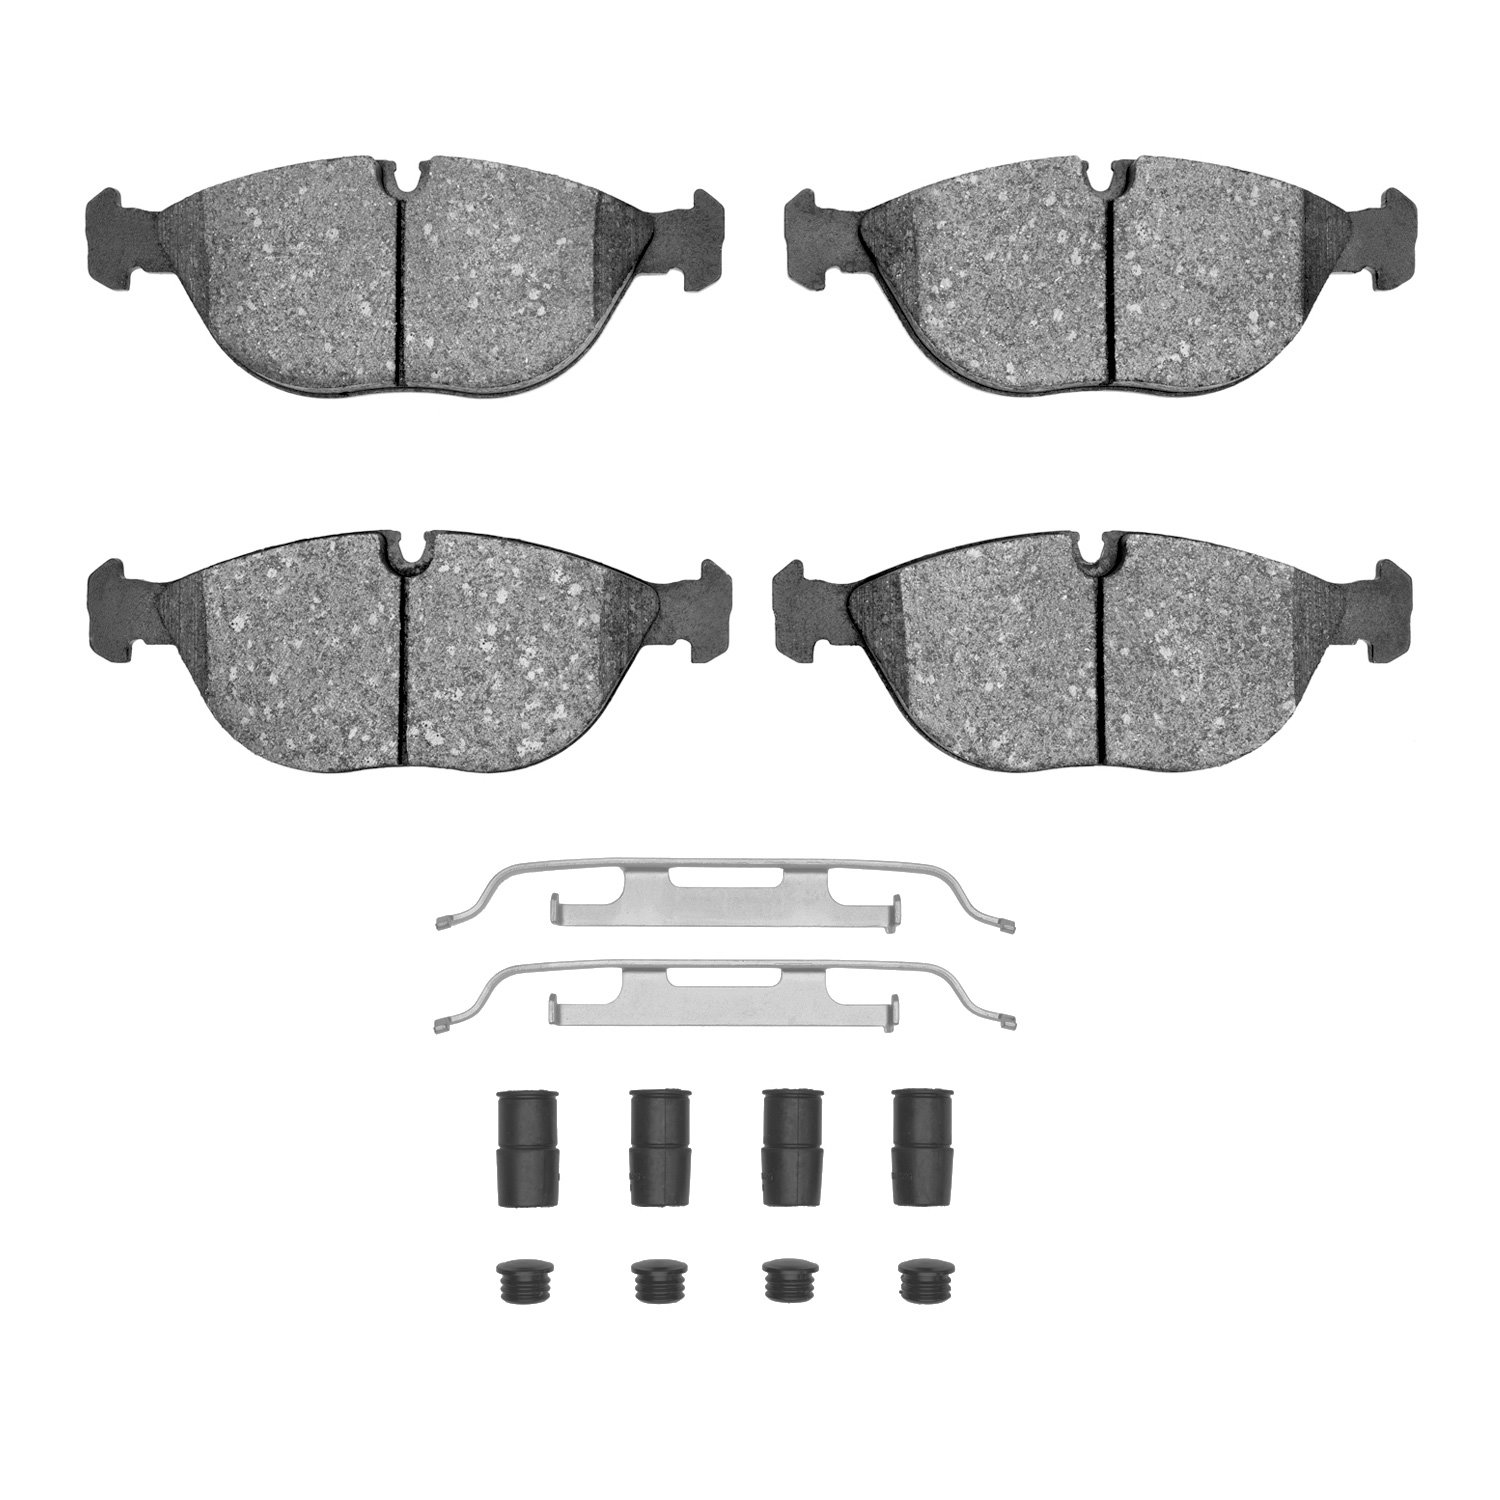 Semi-Metallic Brake Pads & Hardware Kit, 1995-2006 Fits Multiple Makes/Models, Position: Front